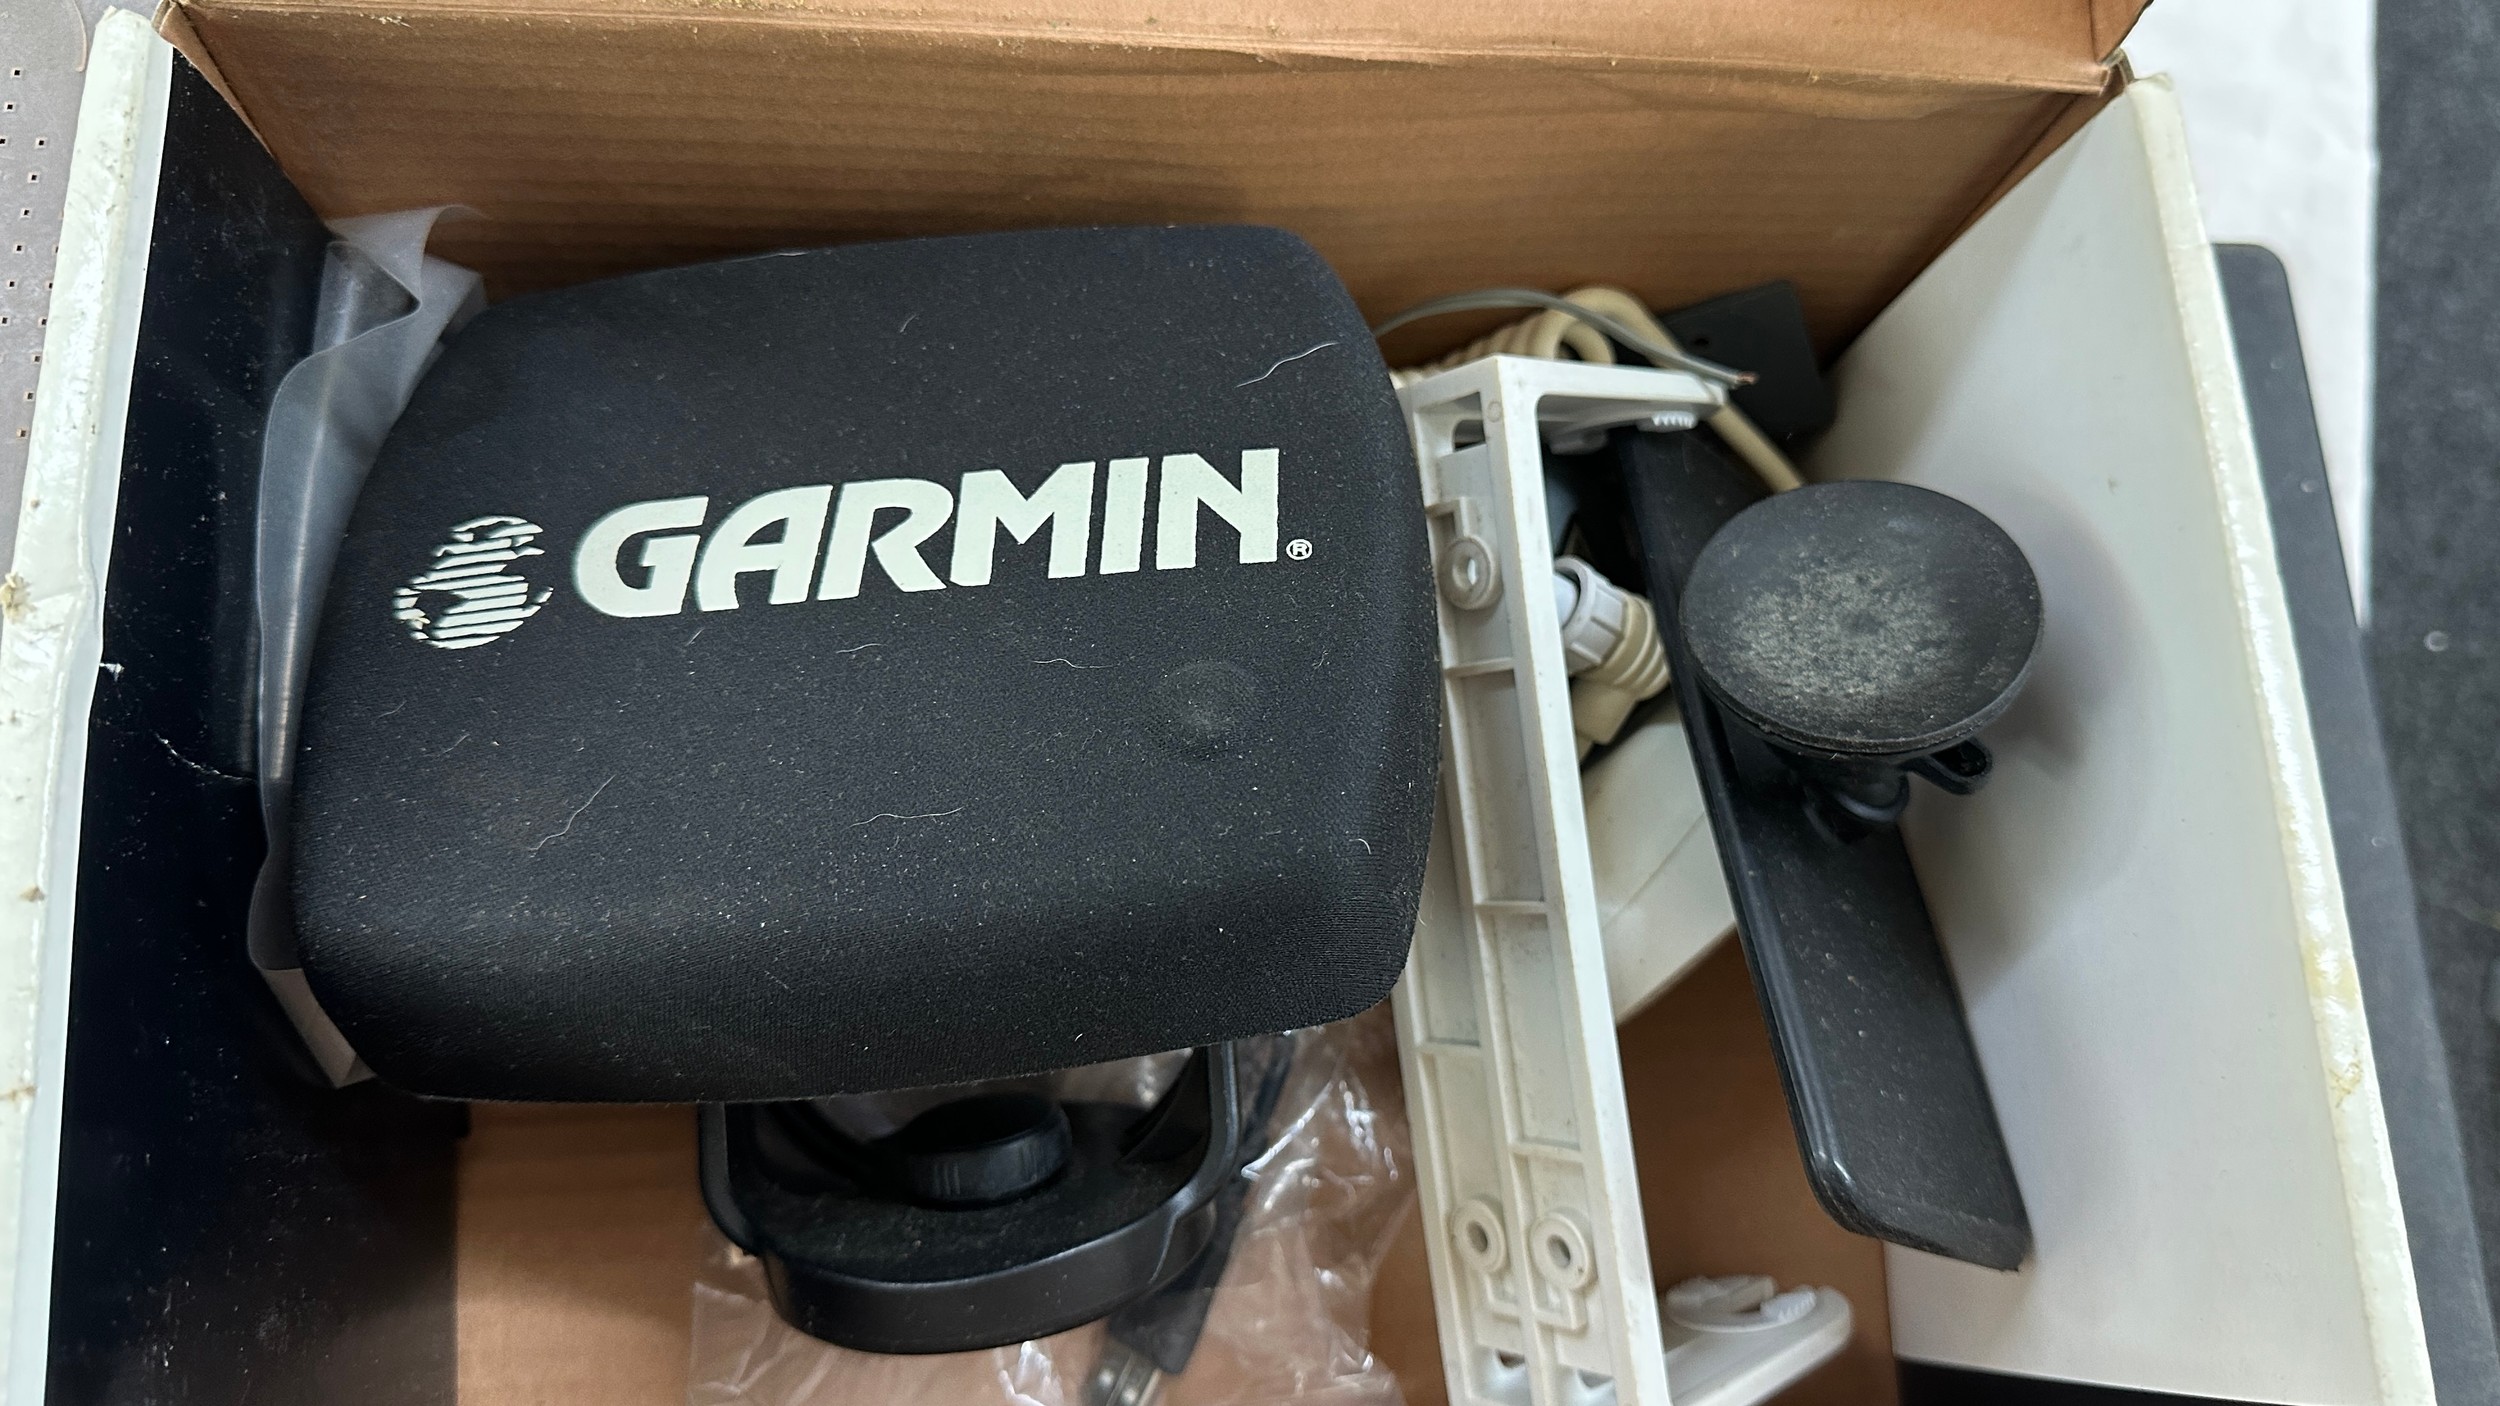 Garmin Fishfinder 160c color sonar and fishing accessories - Image 4 of 7